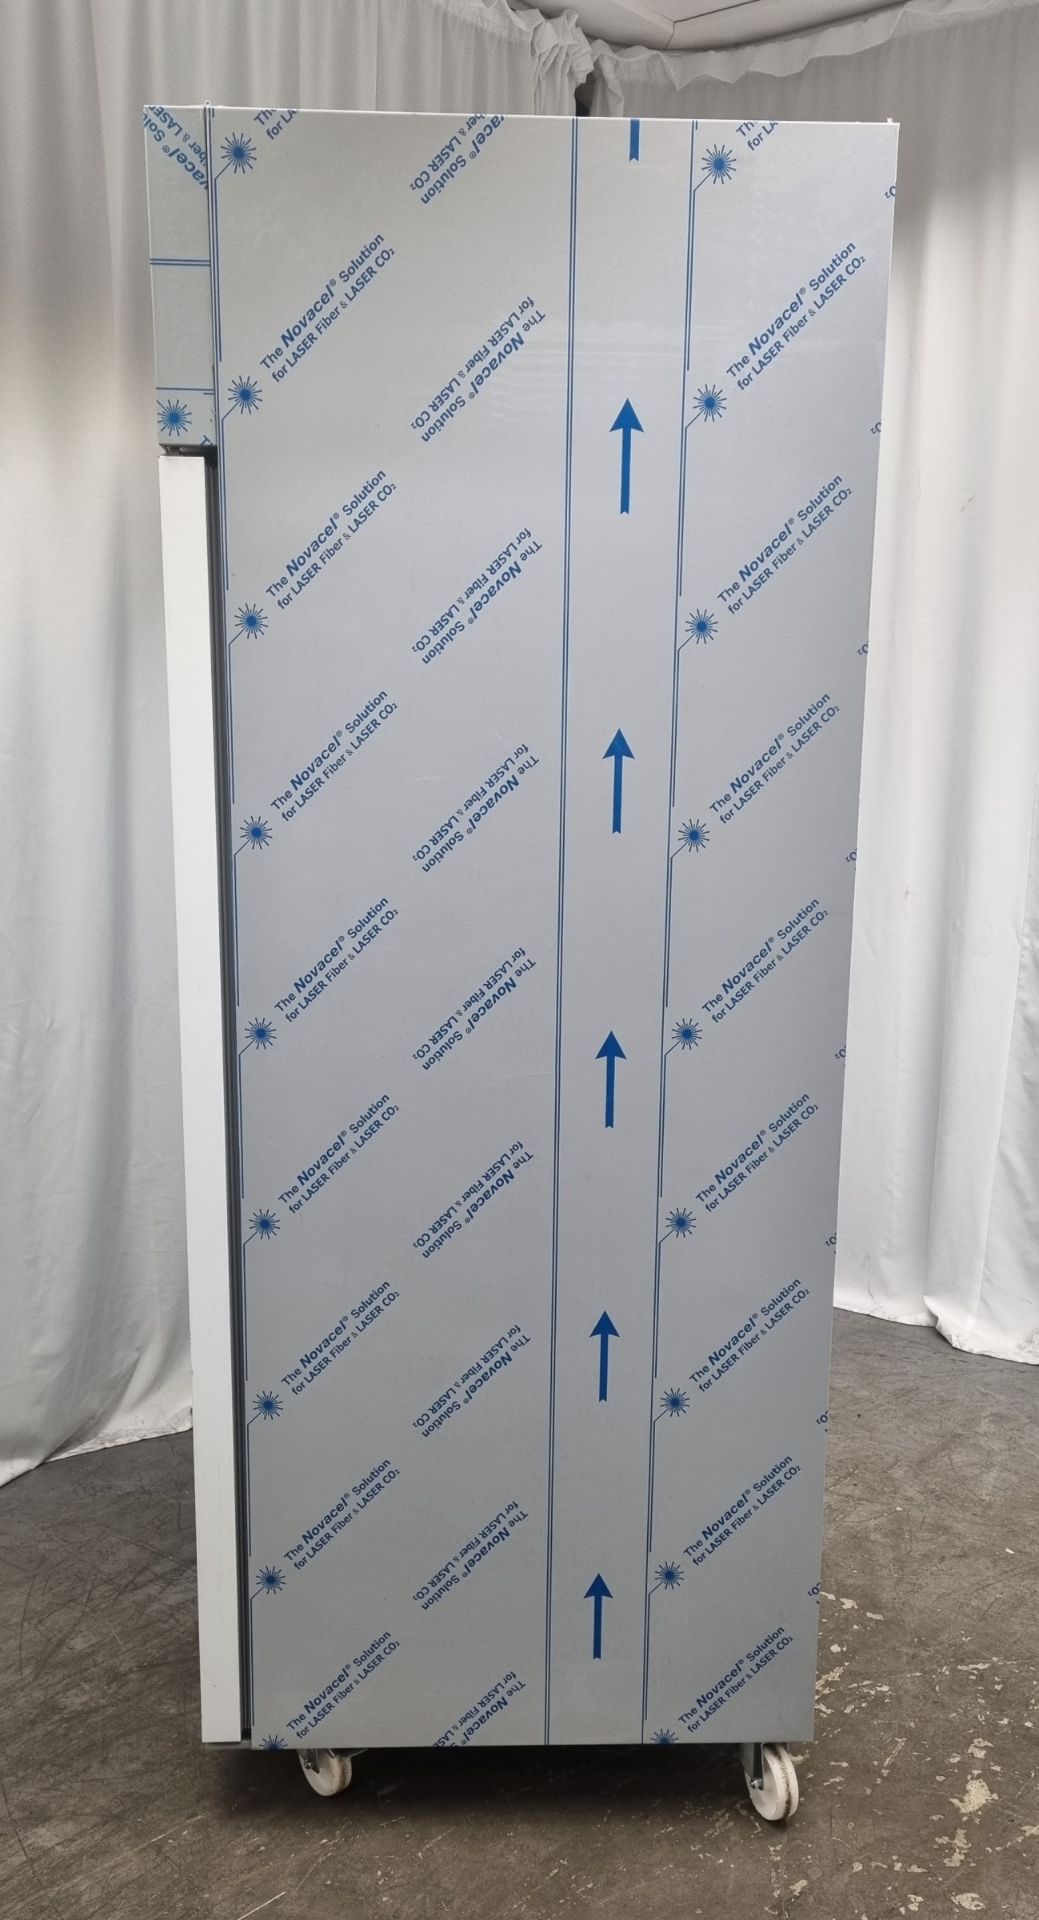 Iceinox VTS 1340 CR stainless steel upright, double door refrigerator - Image 7 of 11